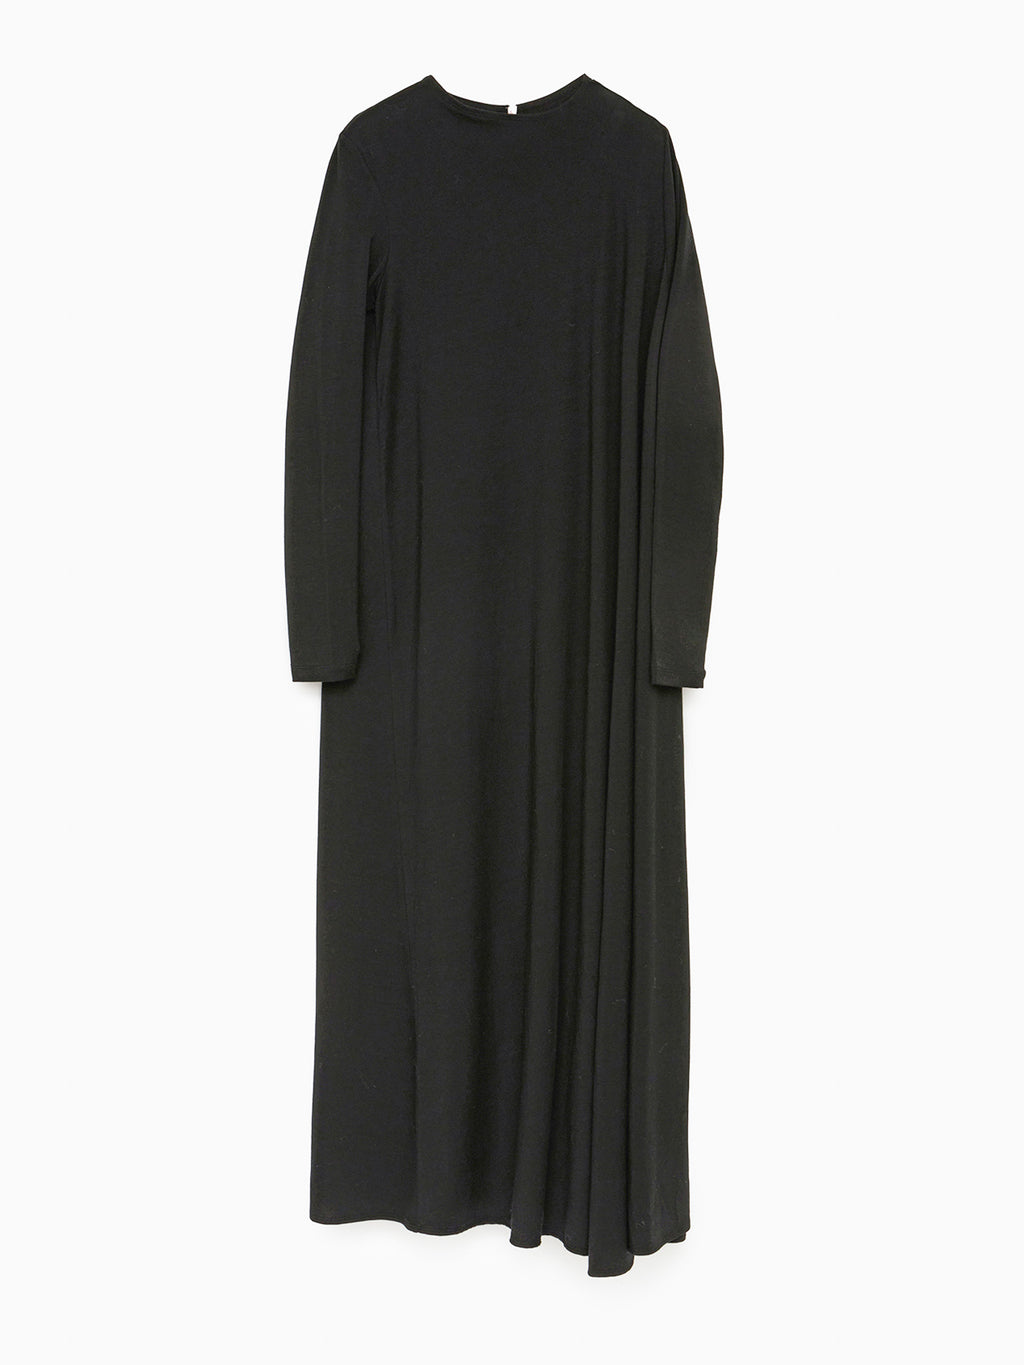 Namu Shop - Babaco Relaxed Jersey Dress - Black